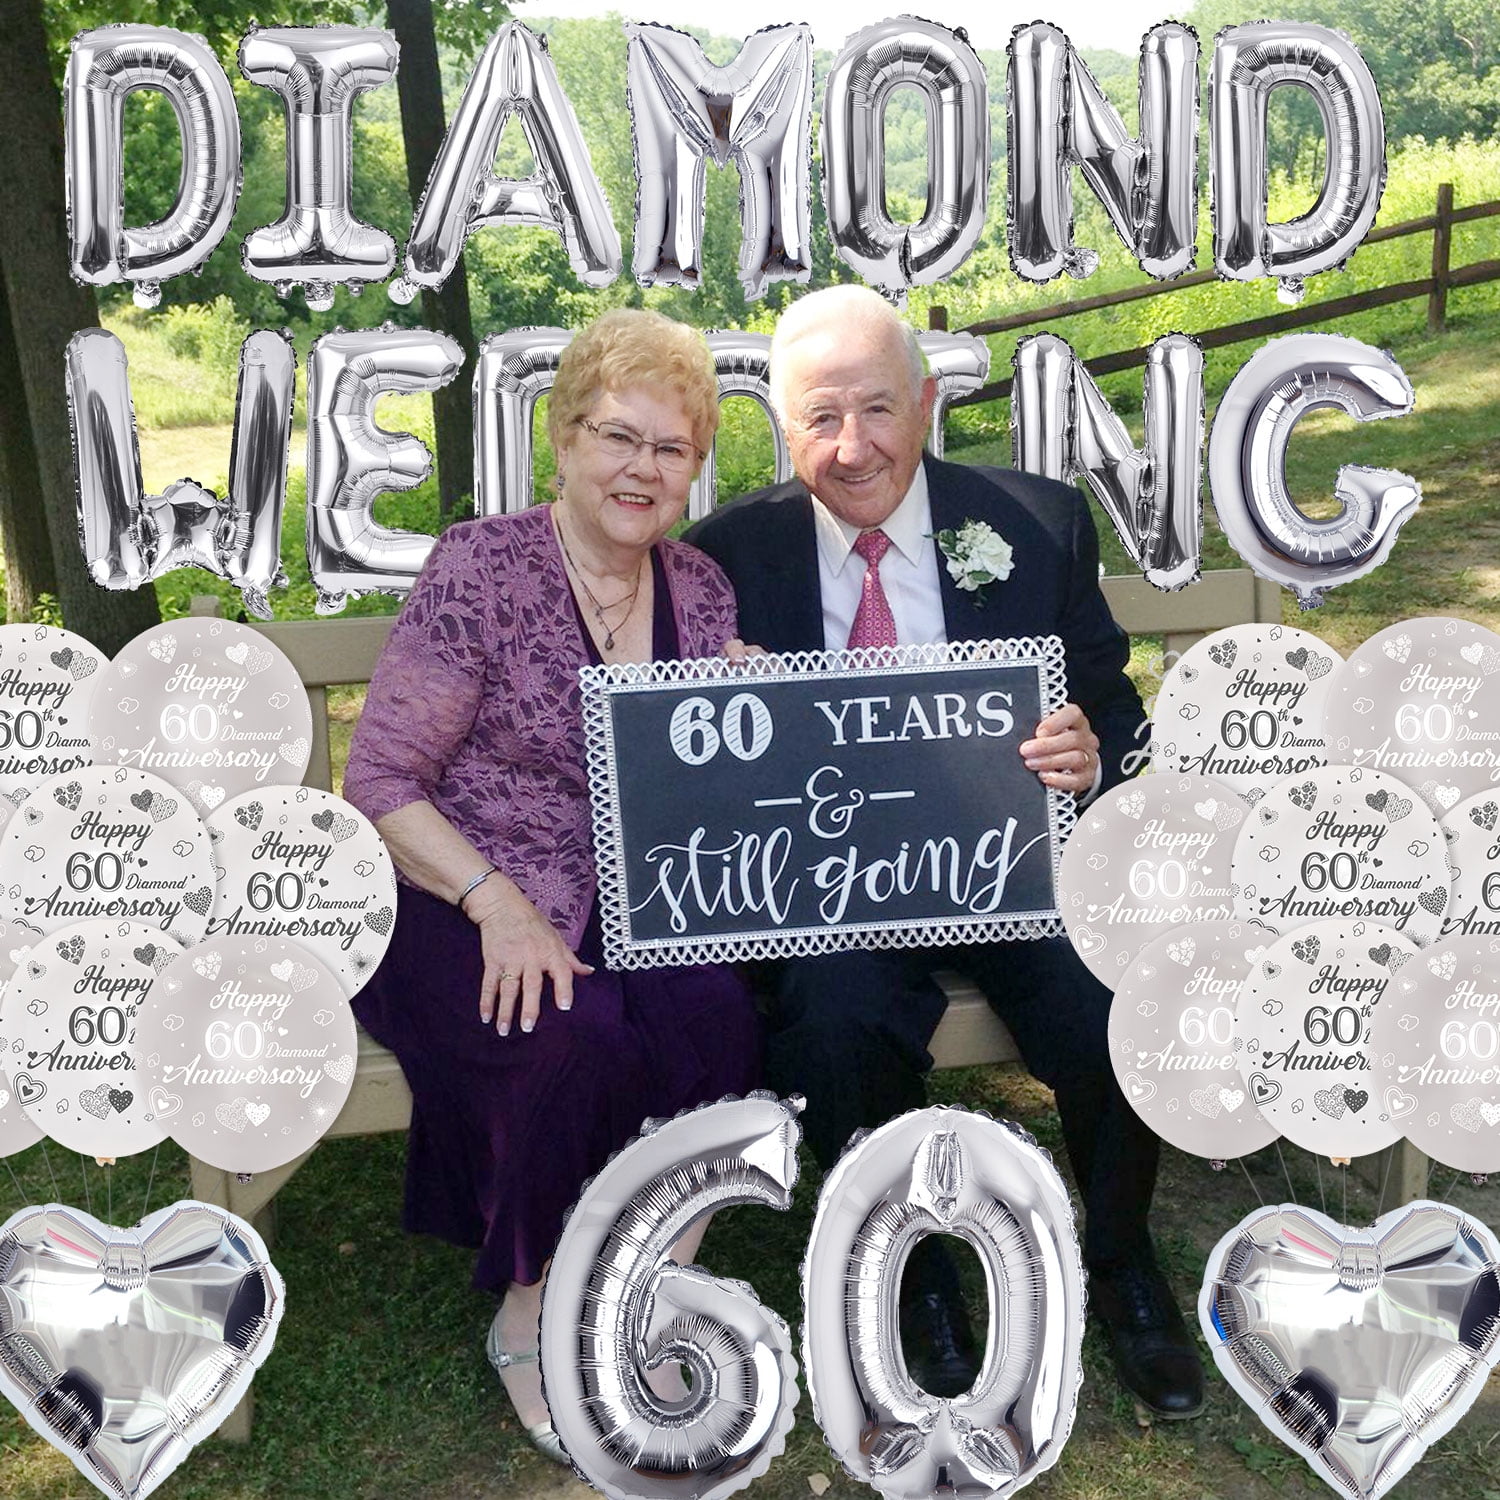 60th Anniversary Decorations, Happy 60th Wedding Anniversary Decorations  with Banner, Cake Topper, H…See more 60th Anniversary Decorations, Happy  60th